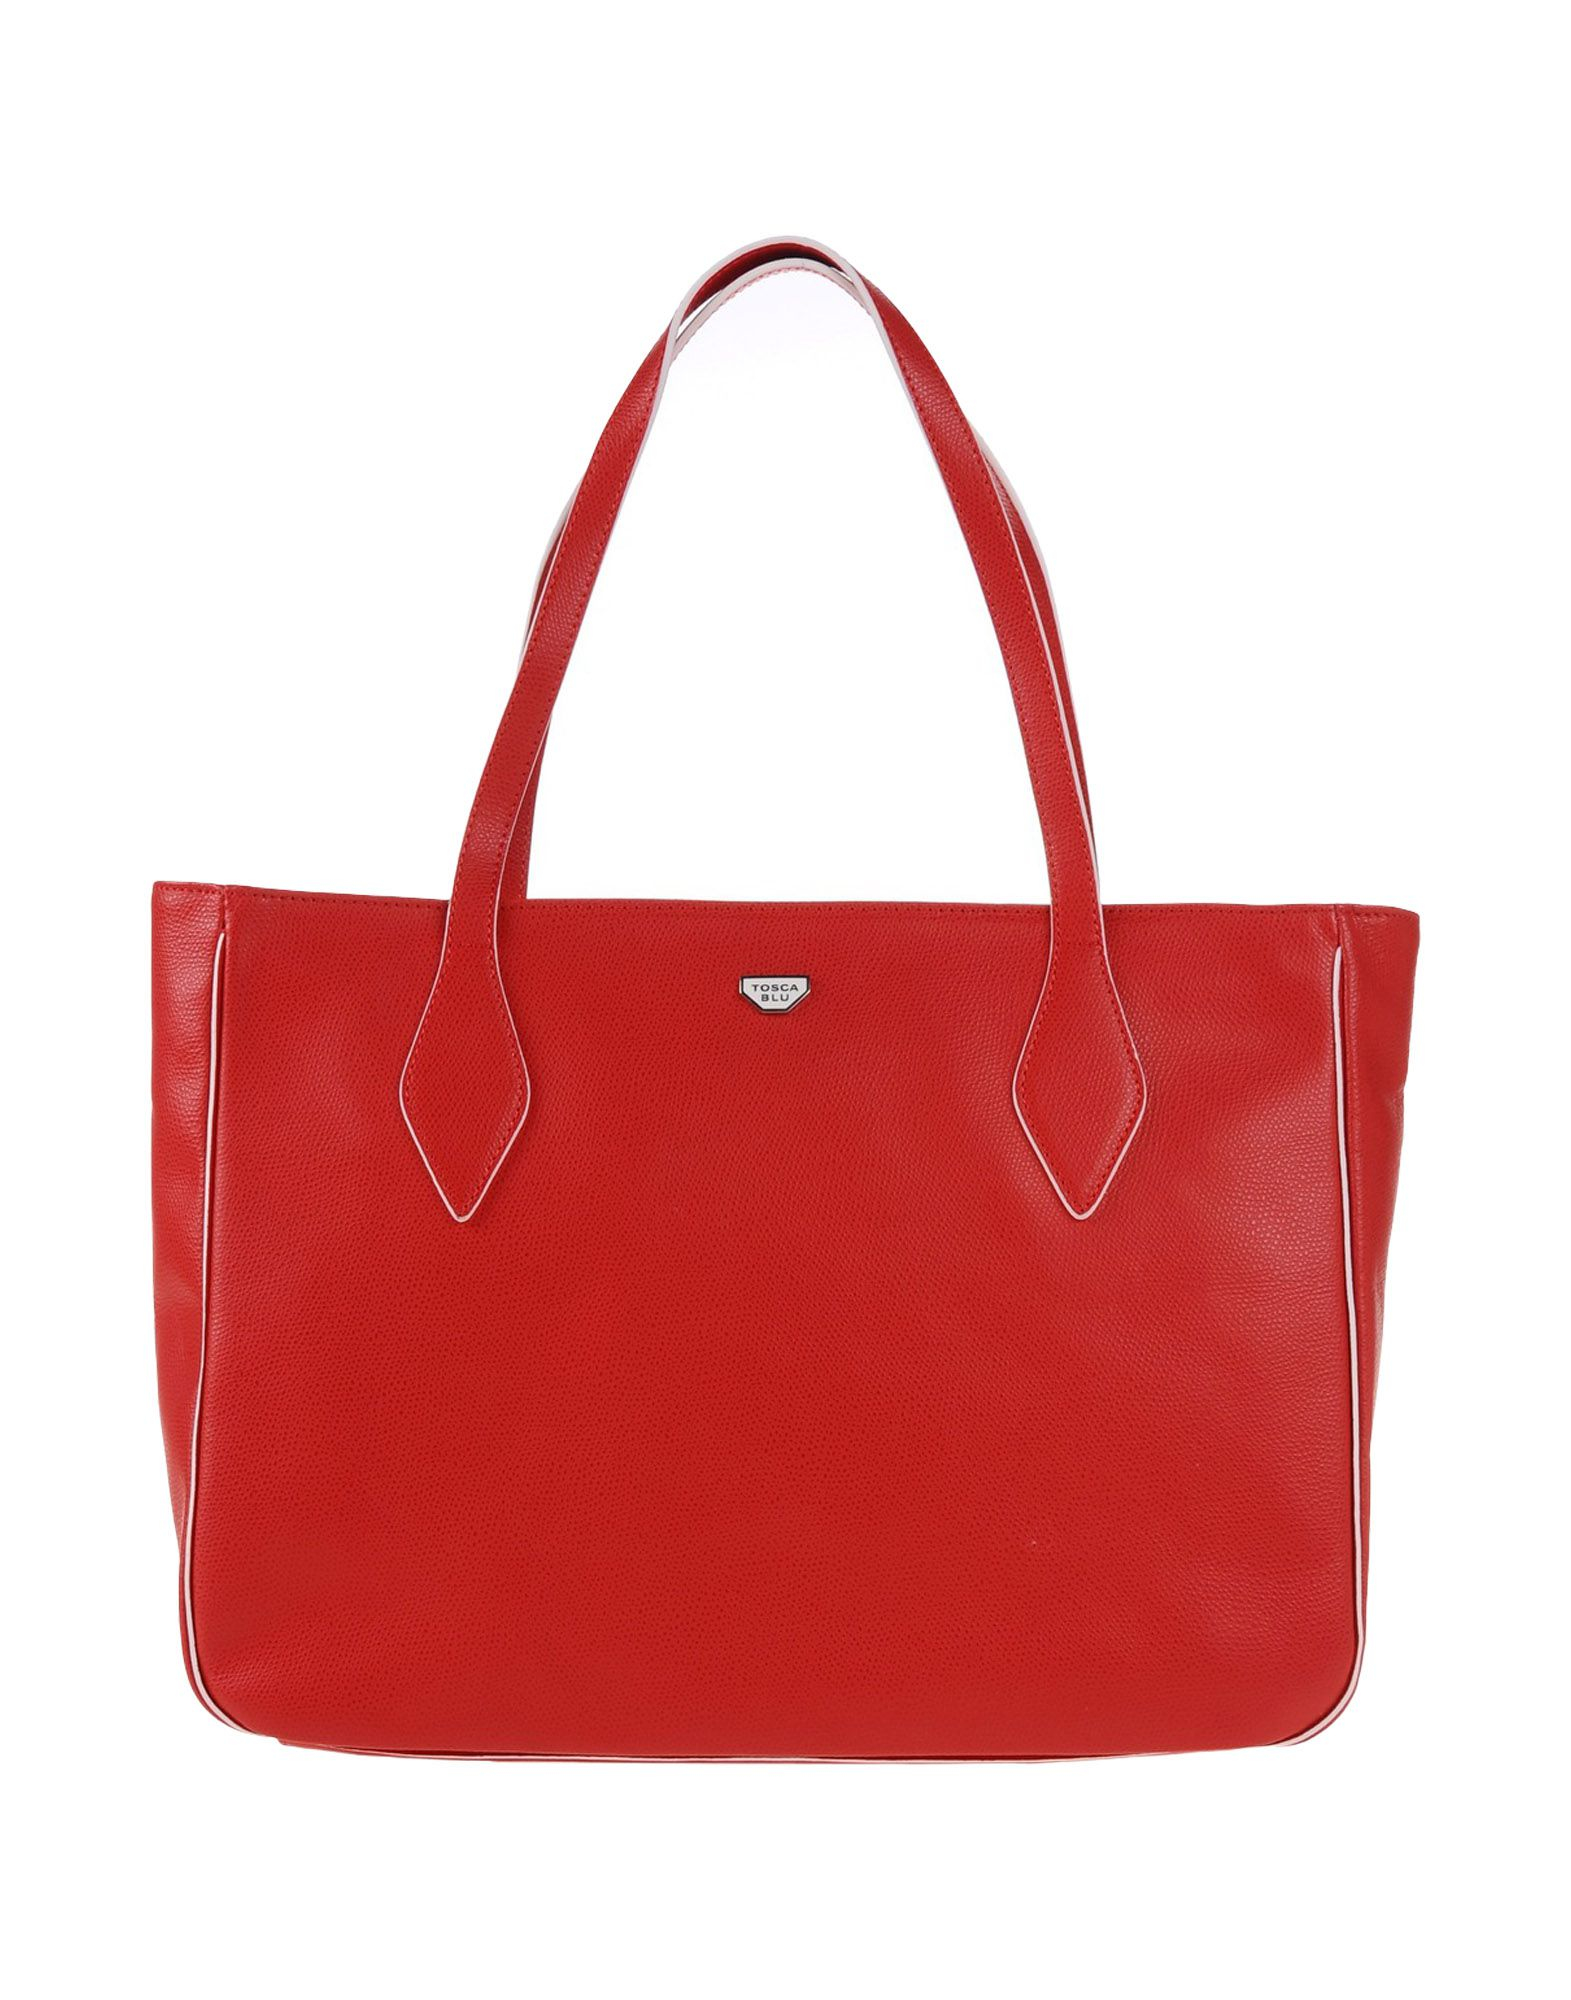 Tosca Blu Leather Handbag in Red - Lyst